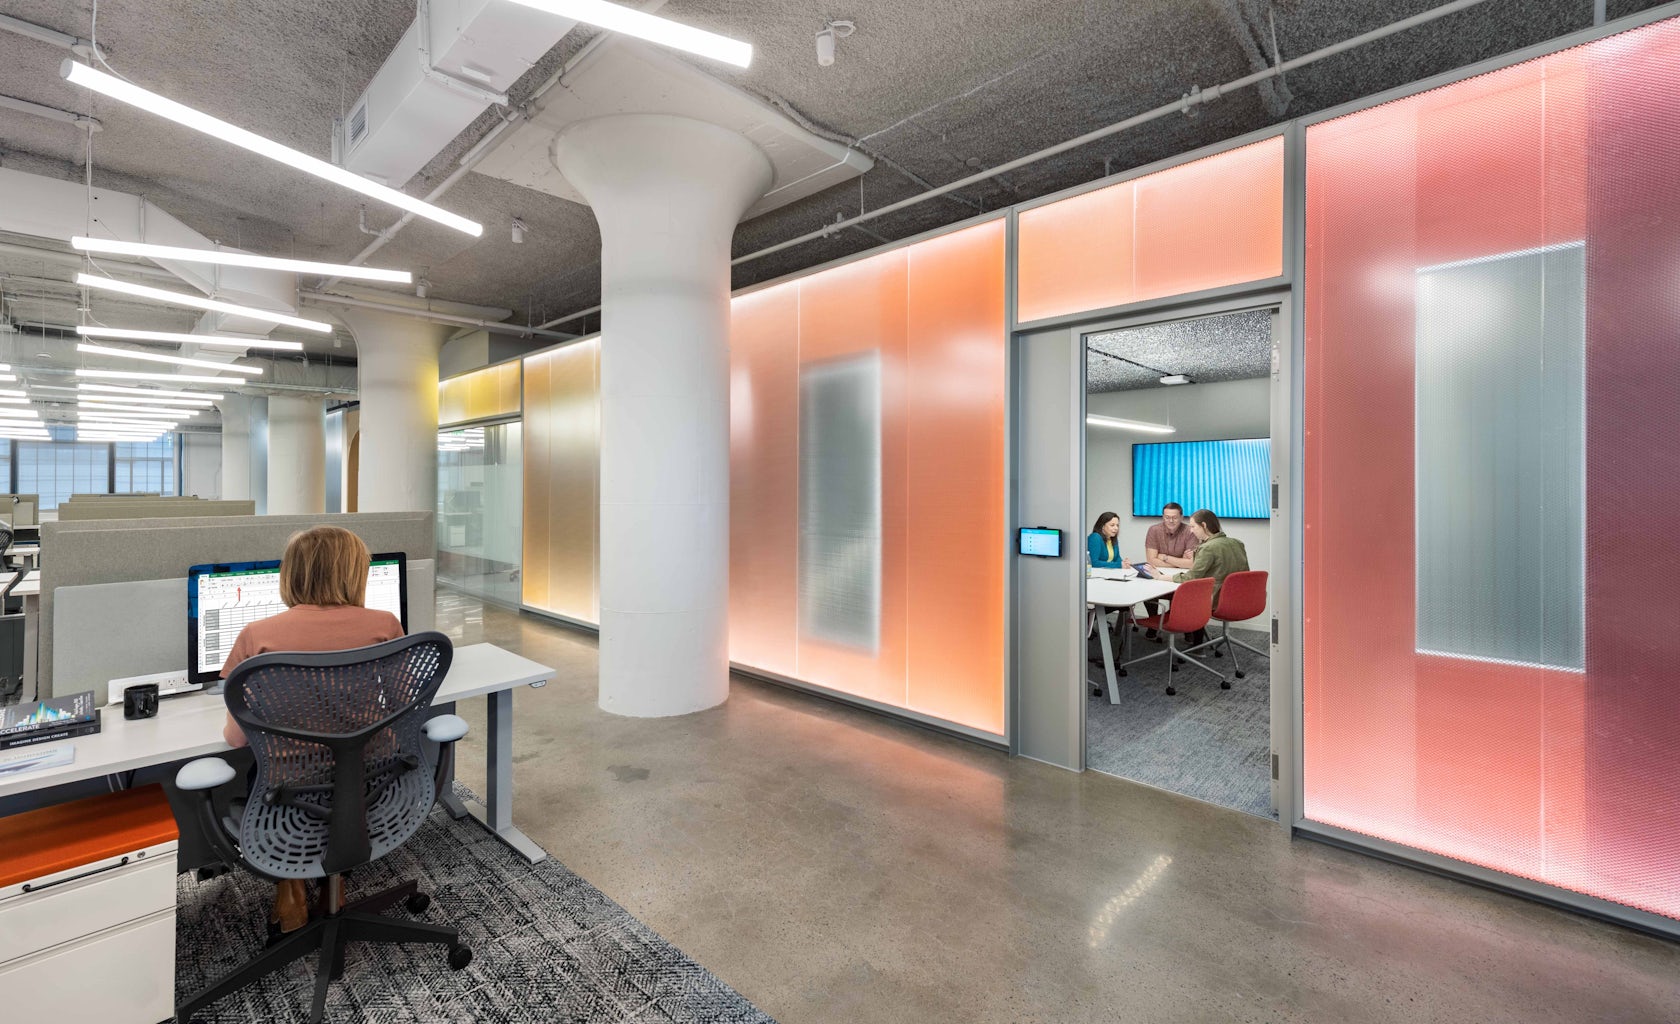 Autodesk Boston Workspace Expansion by Utile, Inc. - Architizer